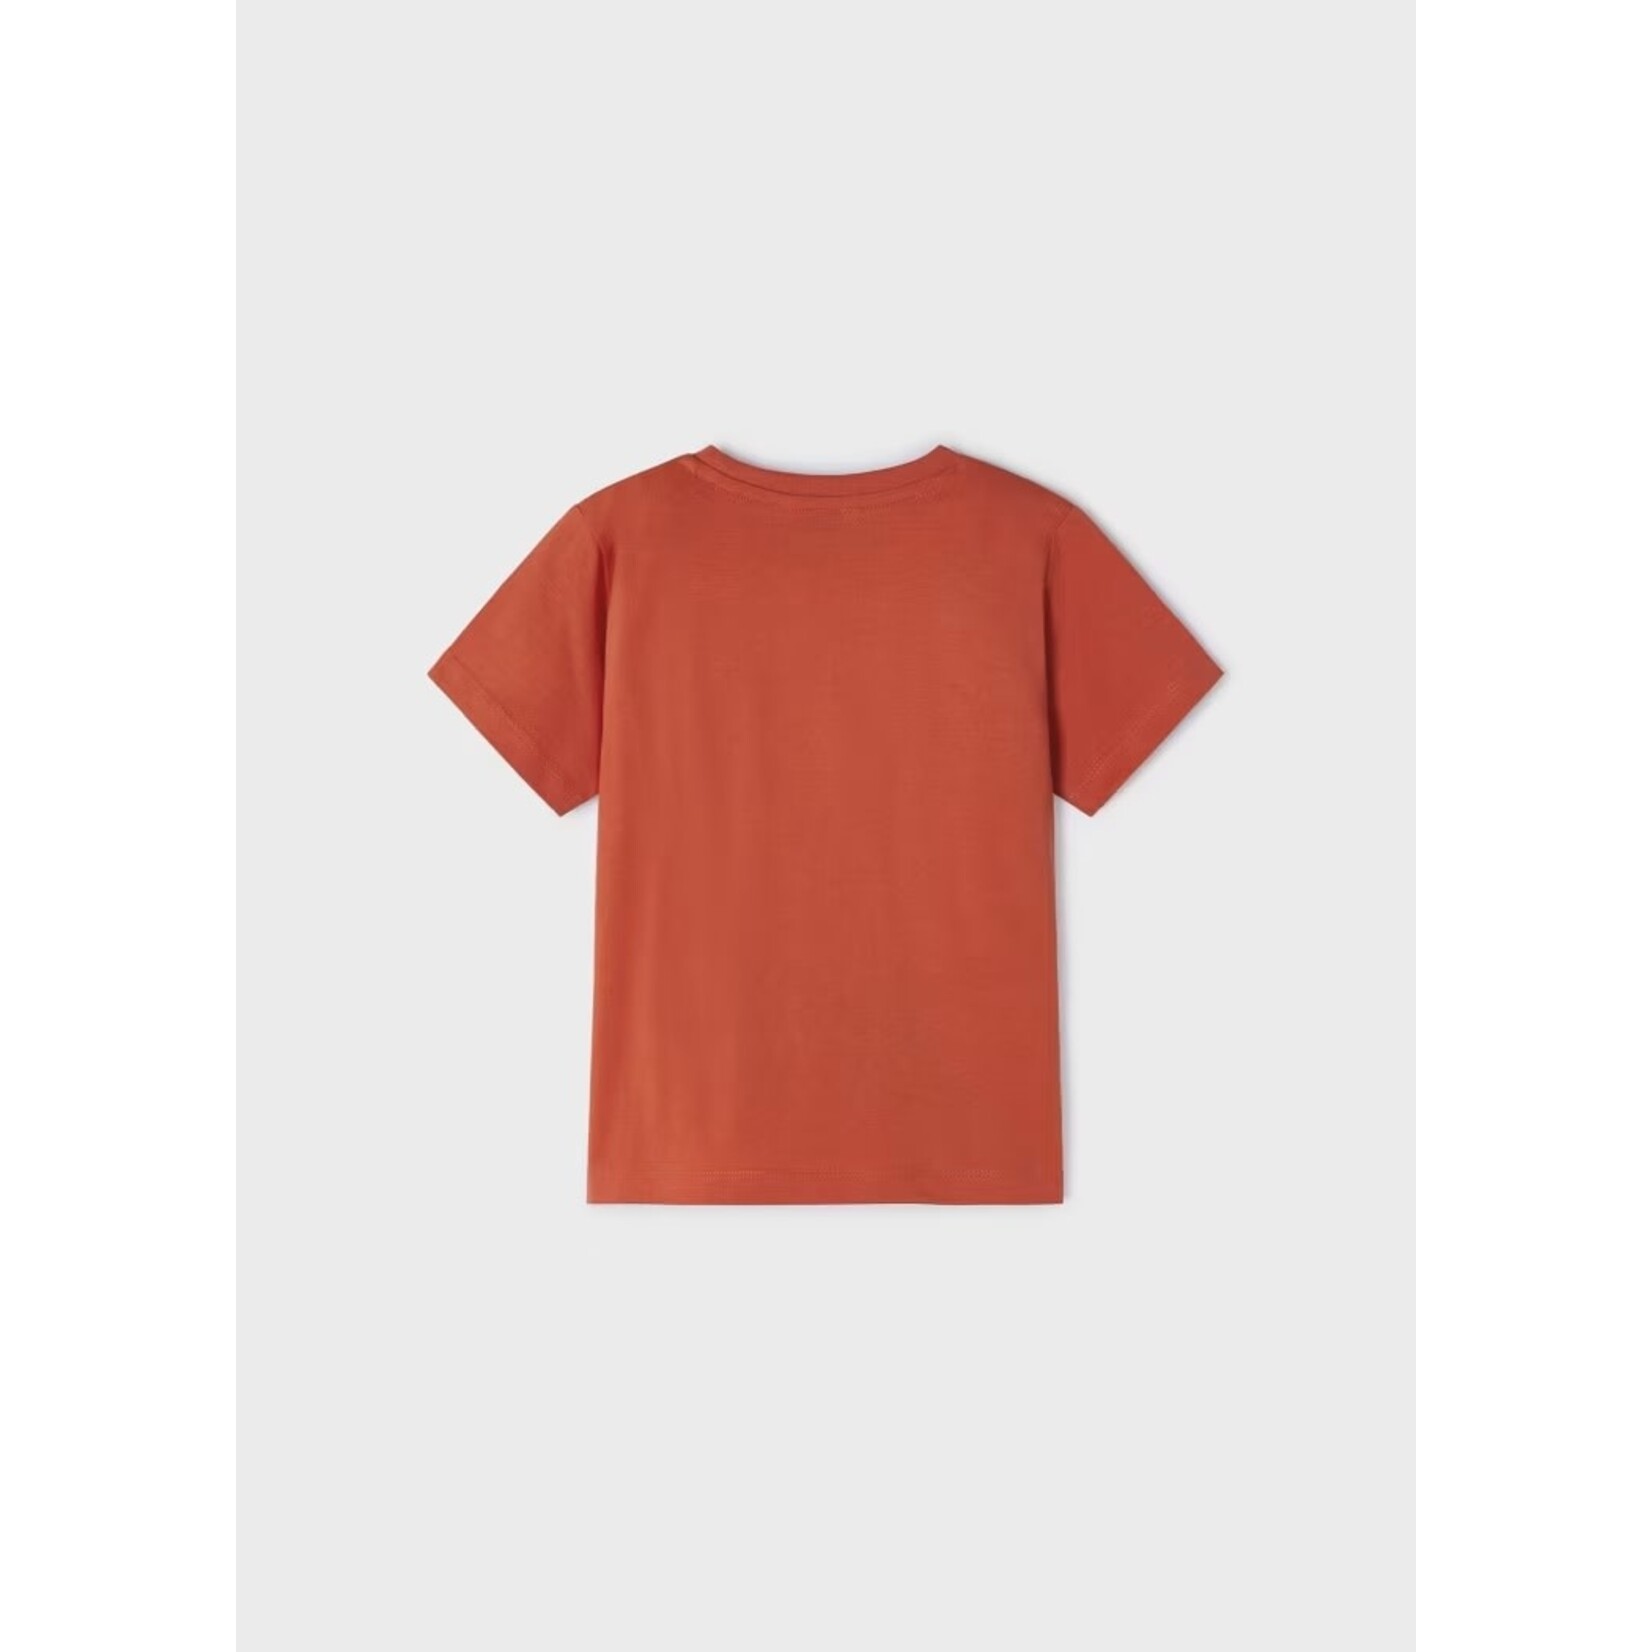 Mayoral MAYORAL - Orange-red short-sleeved t-shirt with landscape photography print